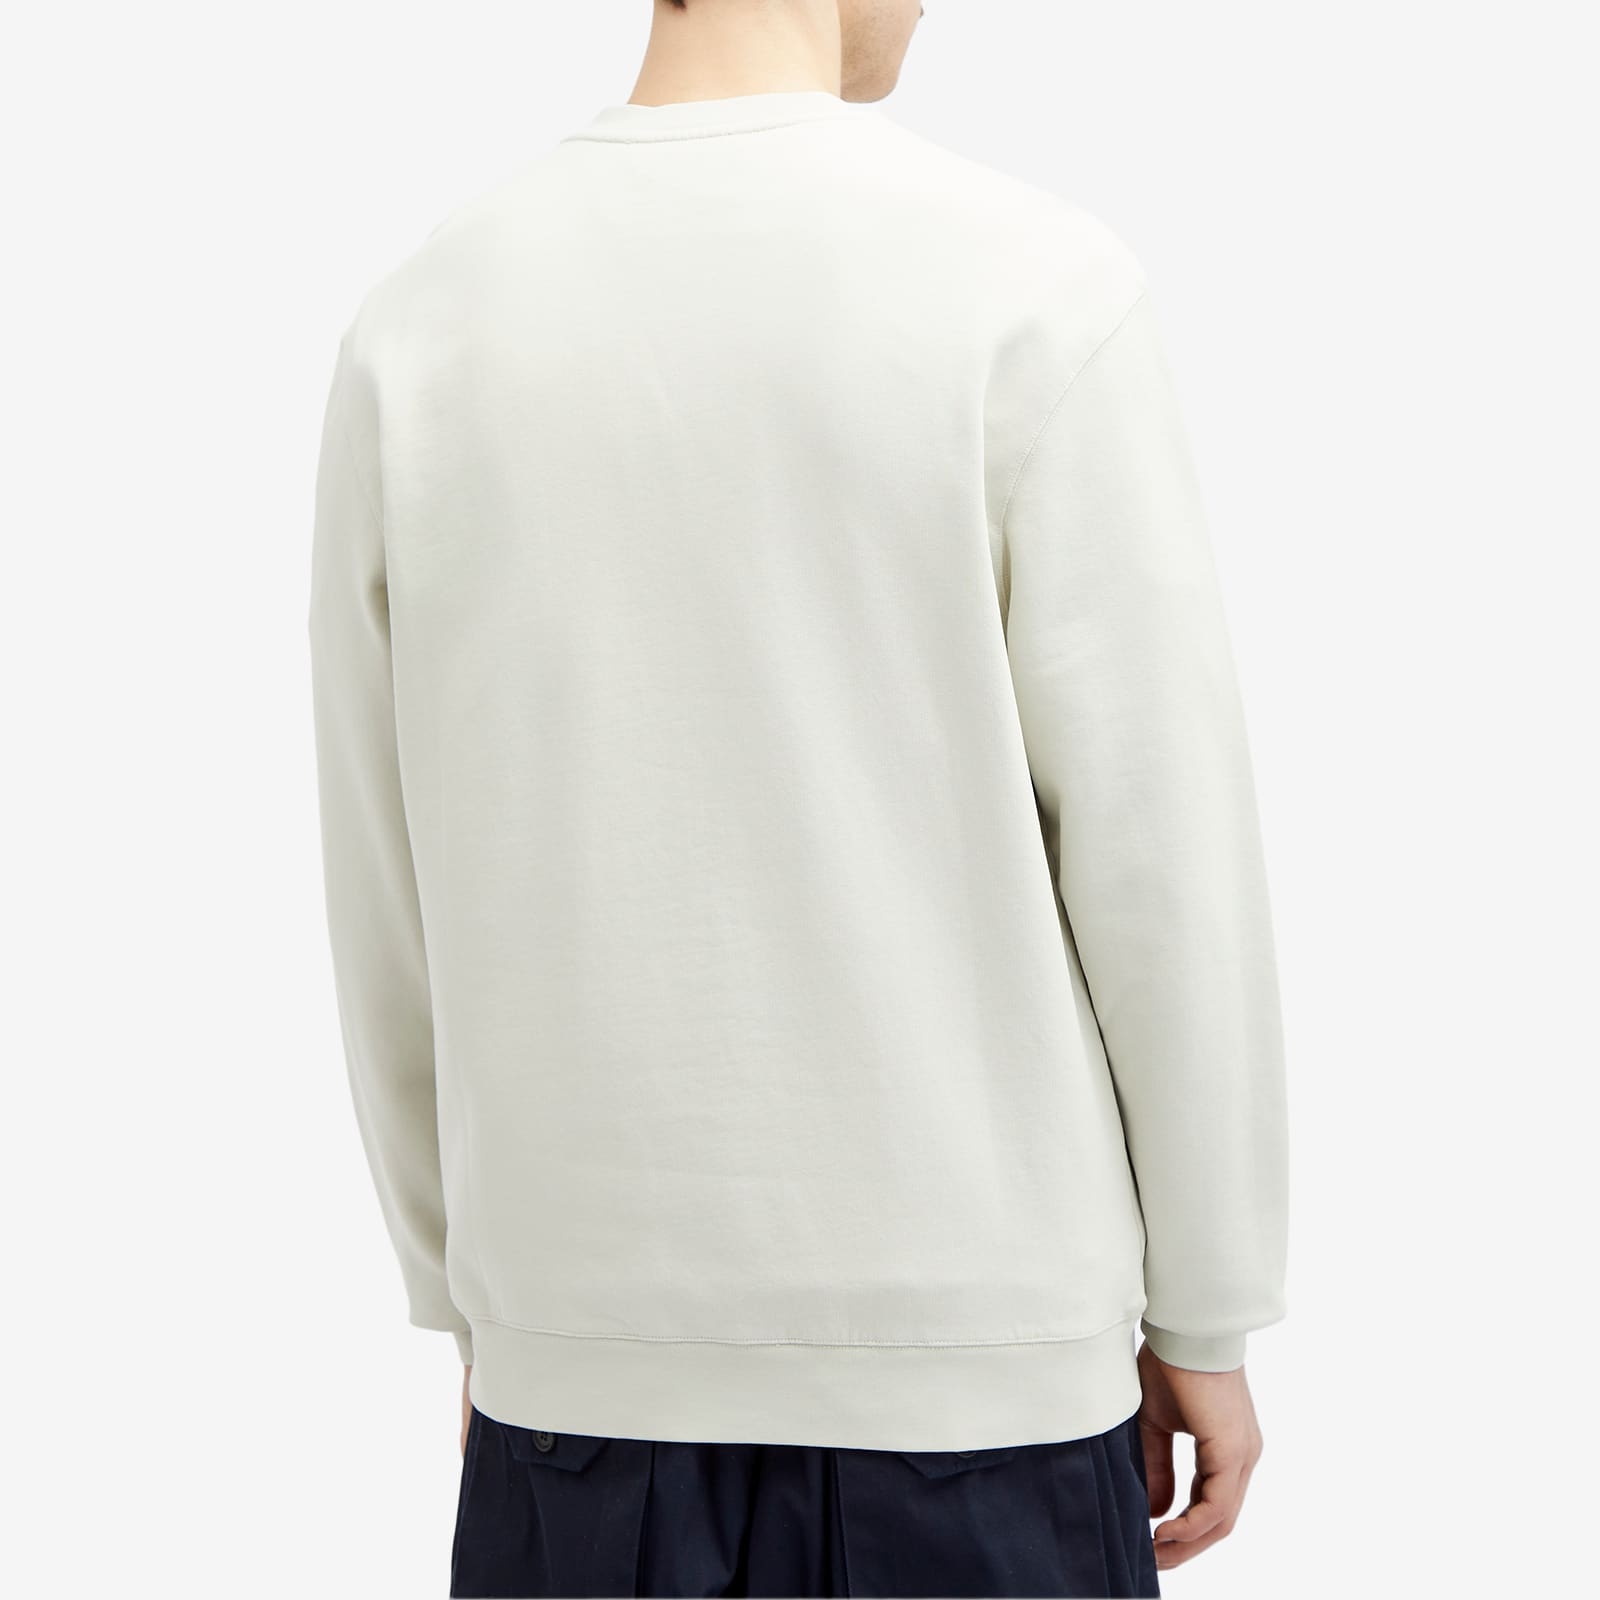 A-COLD-WALL* Essential Sweatshirt - 3